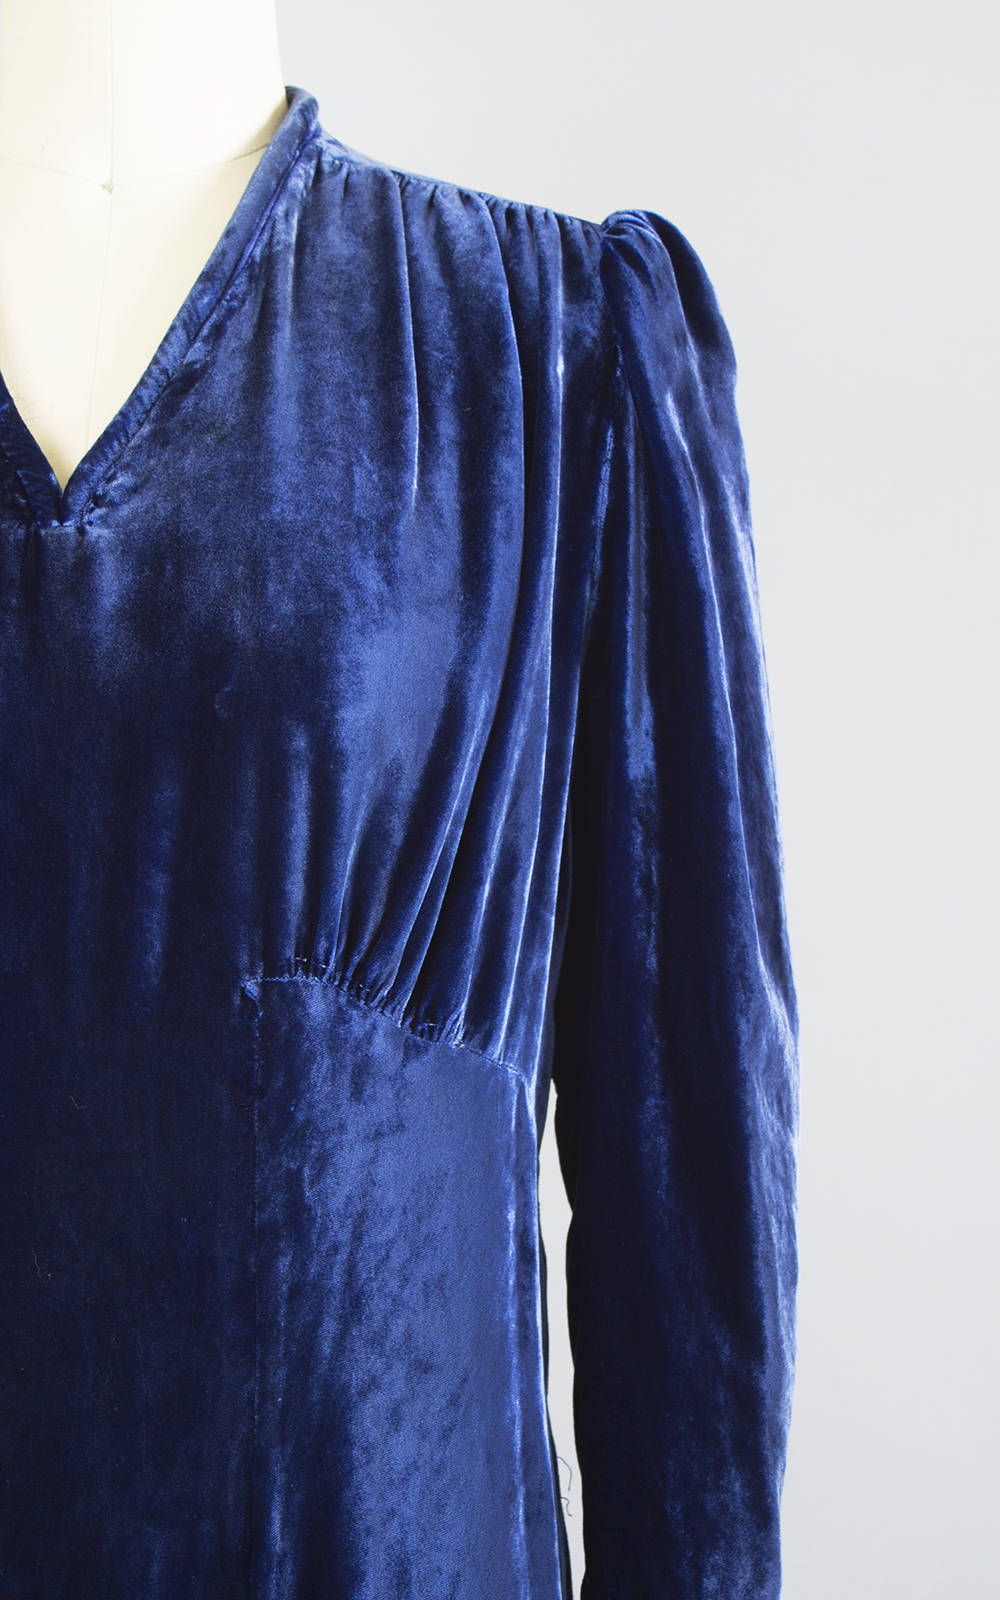 Vintage 1930s 1940s Dress | 30s 40s Dark Blue Silk Velvet Bias Cut Long Sleeve Cocktail Party Evening Dress (small)